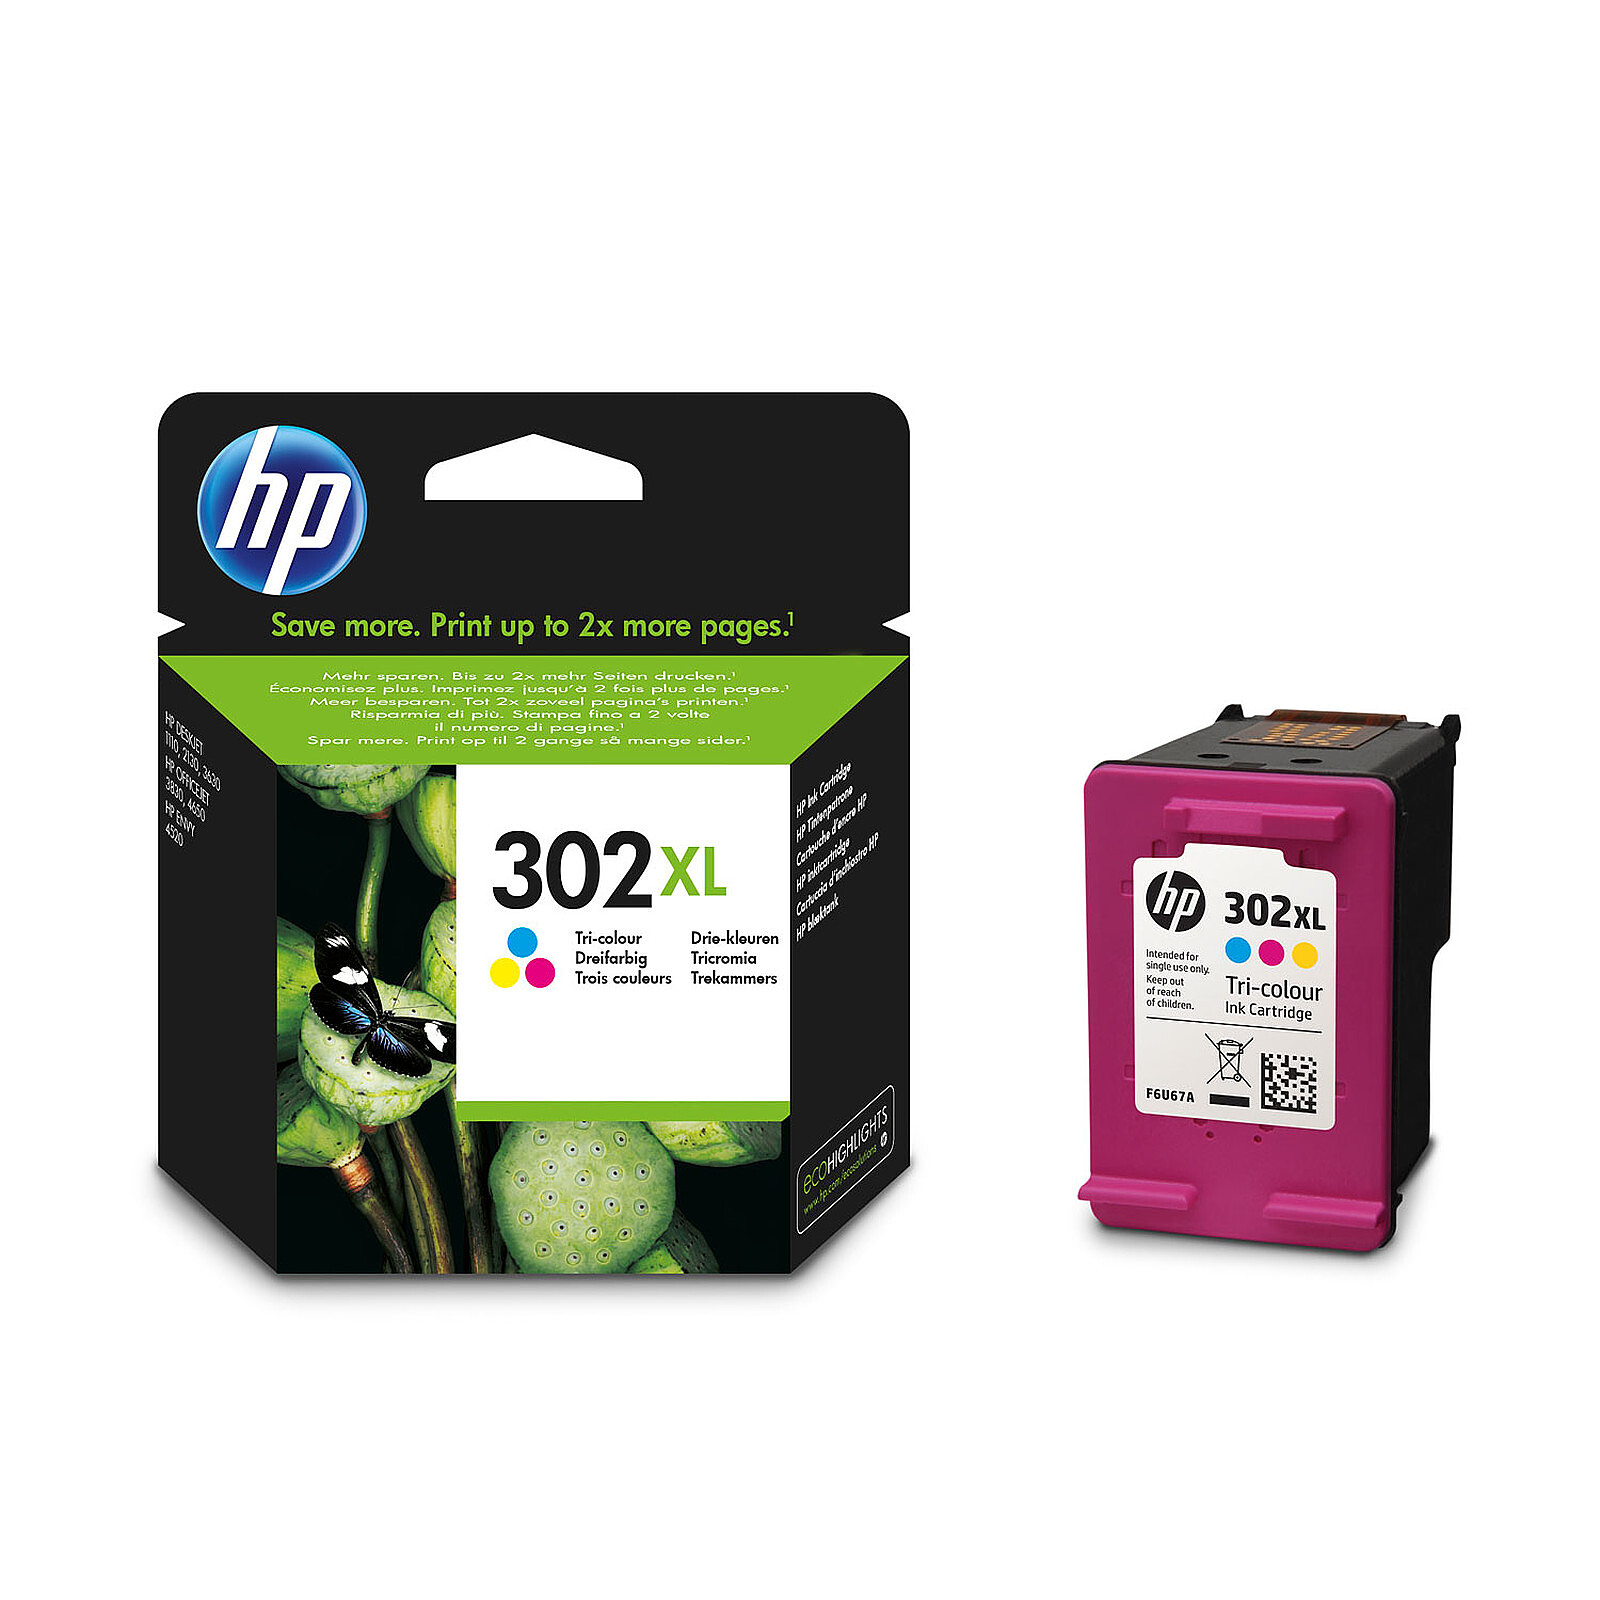 HP 302 XL Cyan, - - Yellow (F6U67AE) Magenta, LDLC cartridge Printer